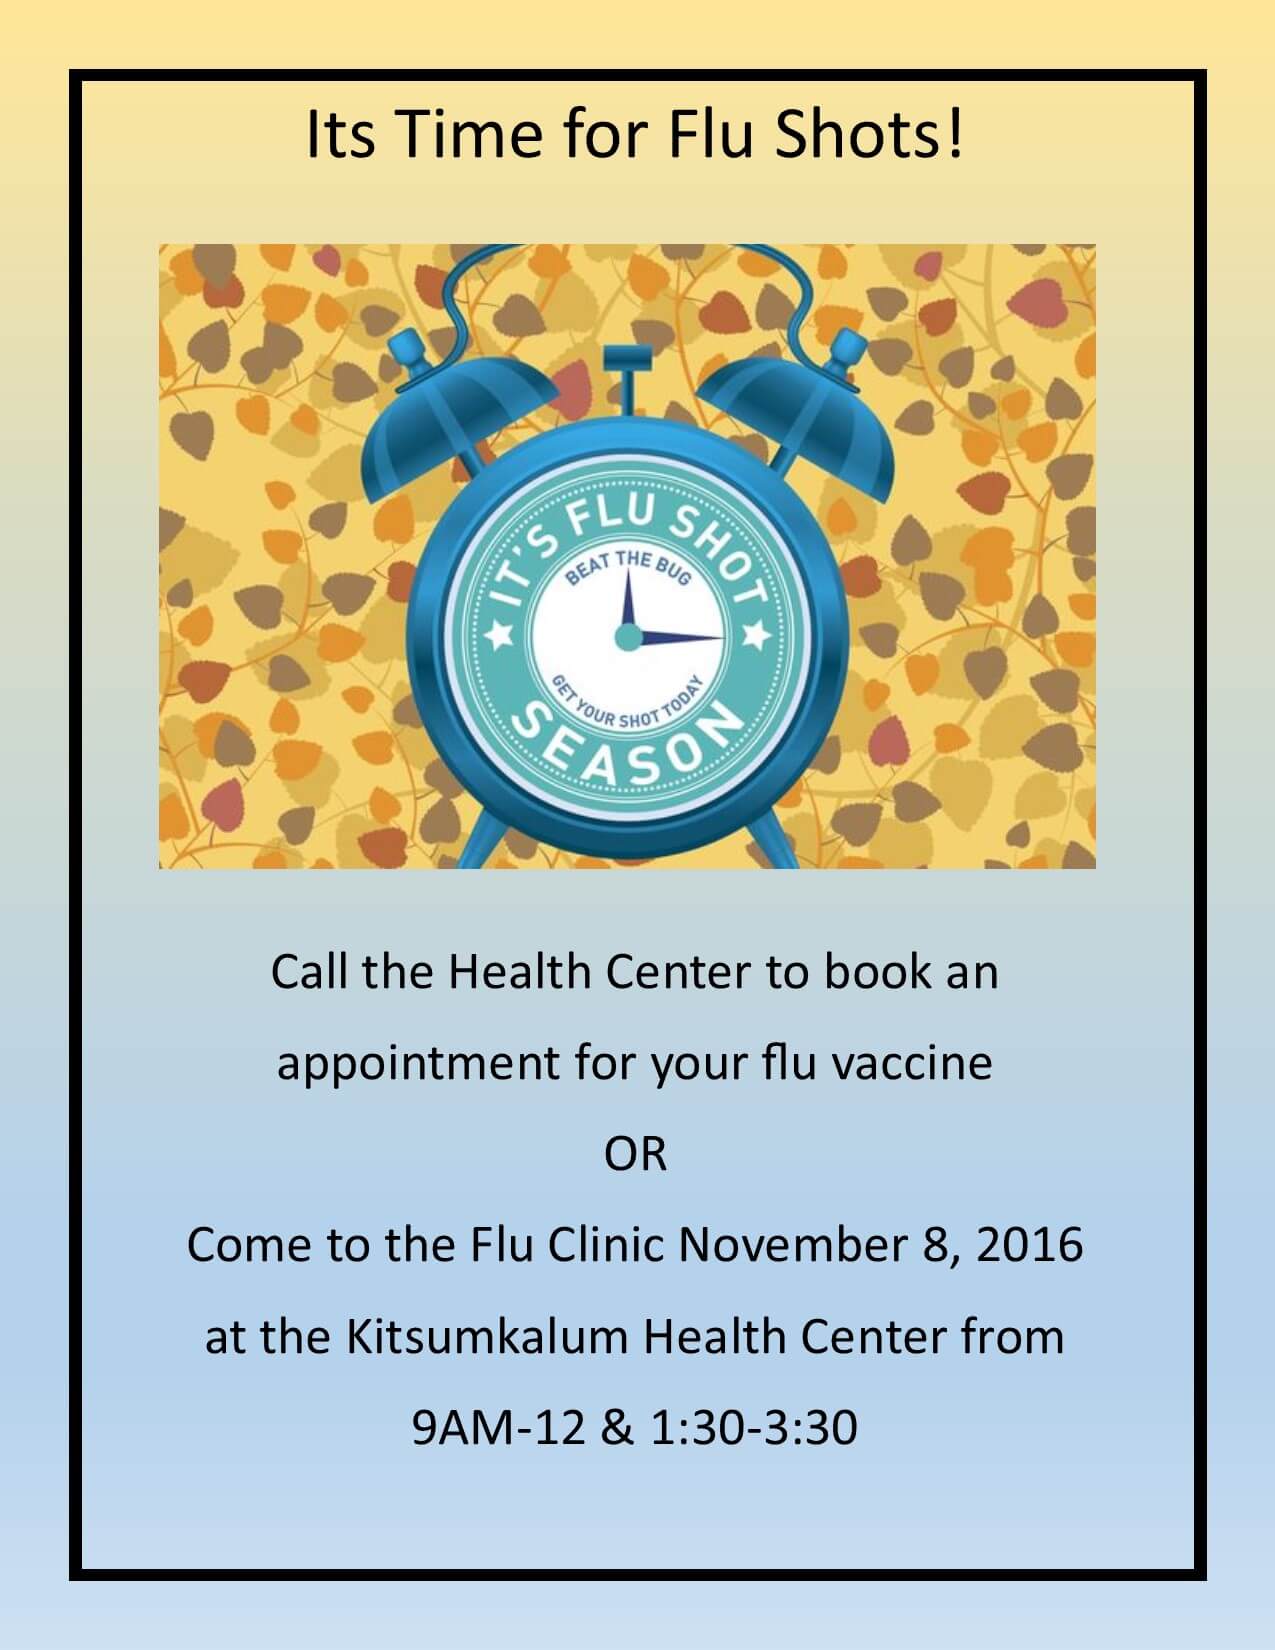 FLU SHOT SEASON: GET YOUR FLU SHOT NOVEMBER 8, 2016